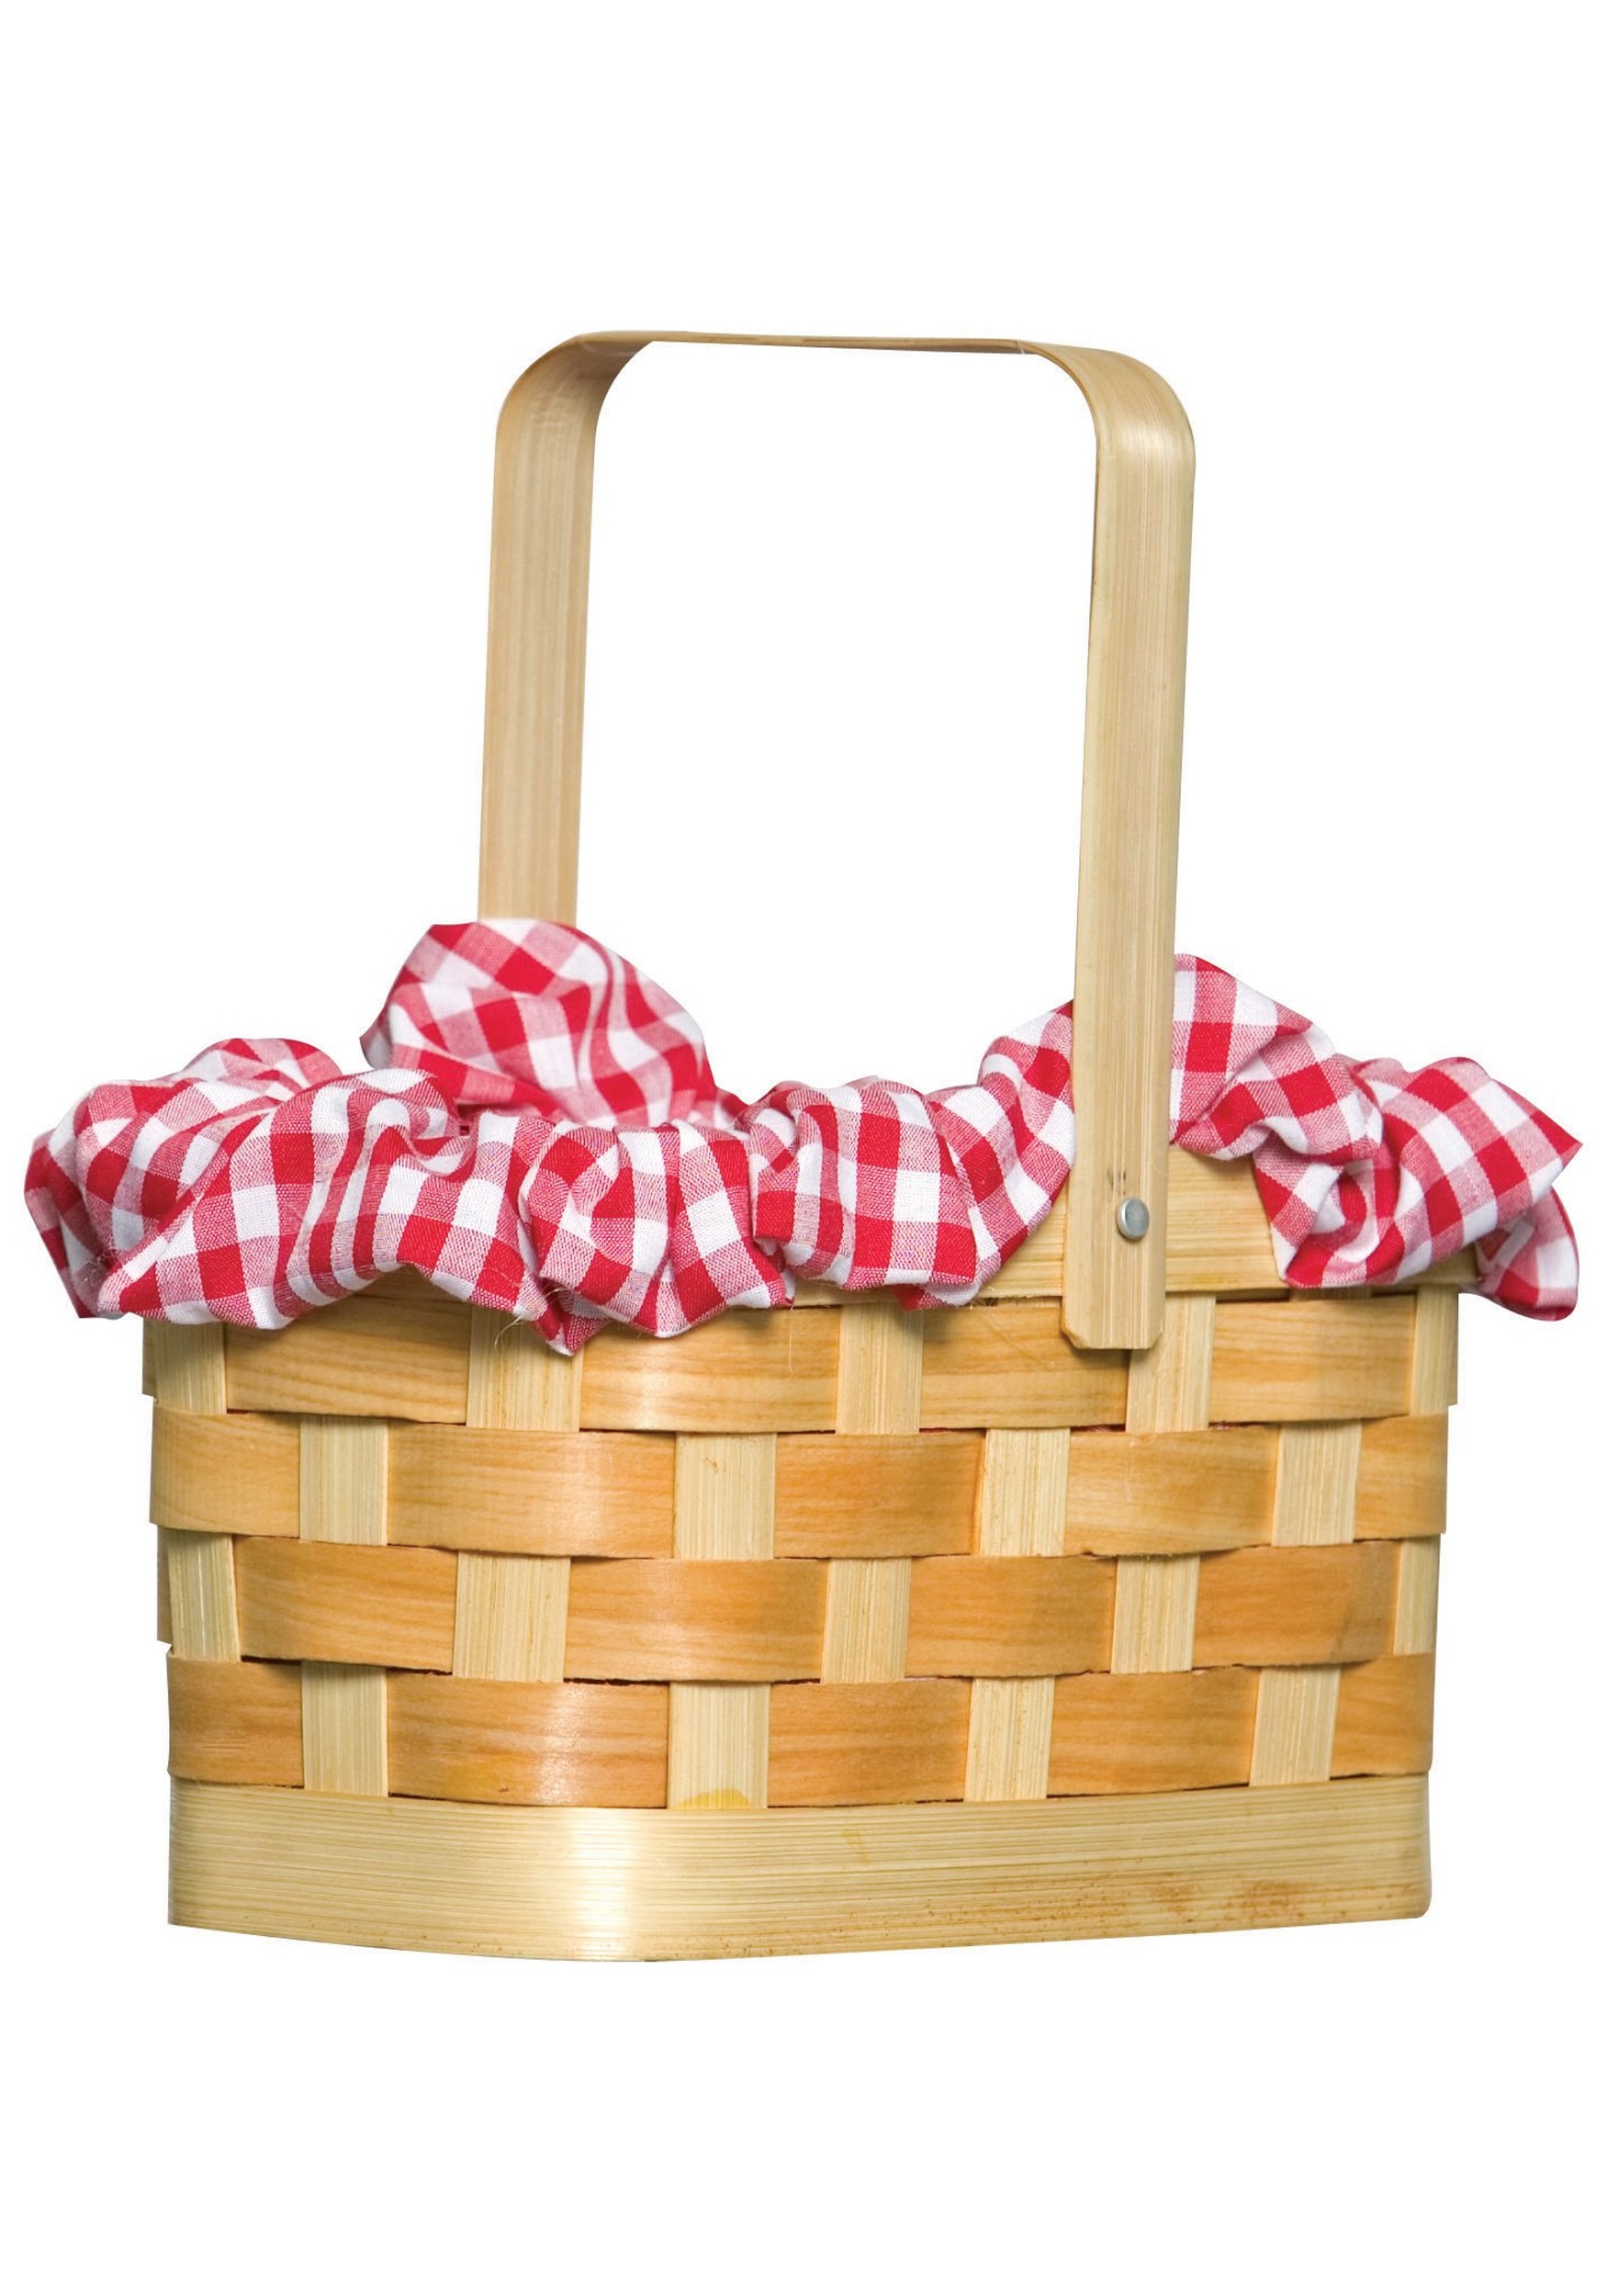 basket clipart straw basket